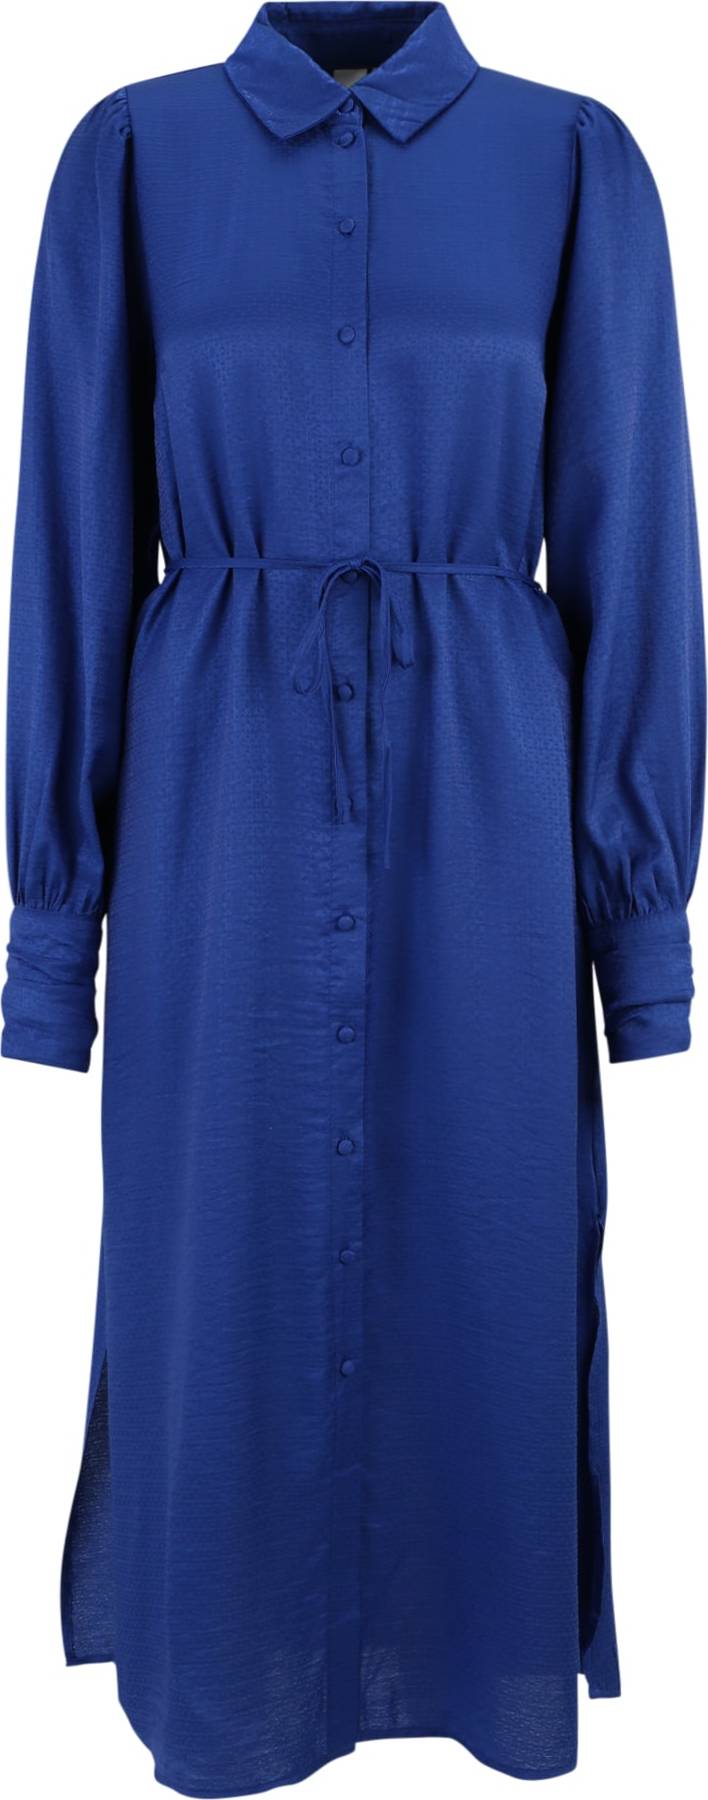 Y.A.S Tall Košilové šaty 'URA' kobaltová modř